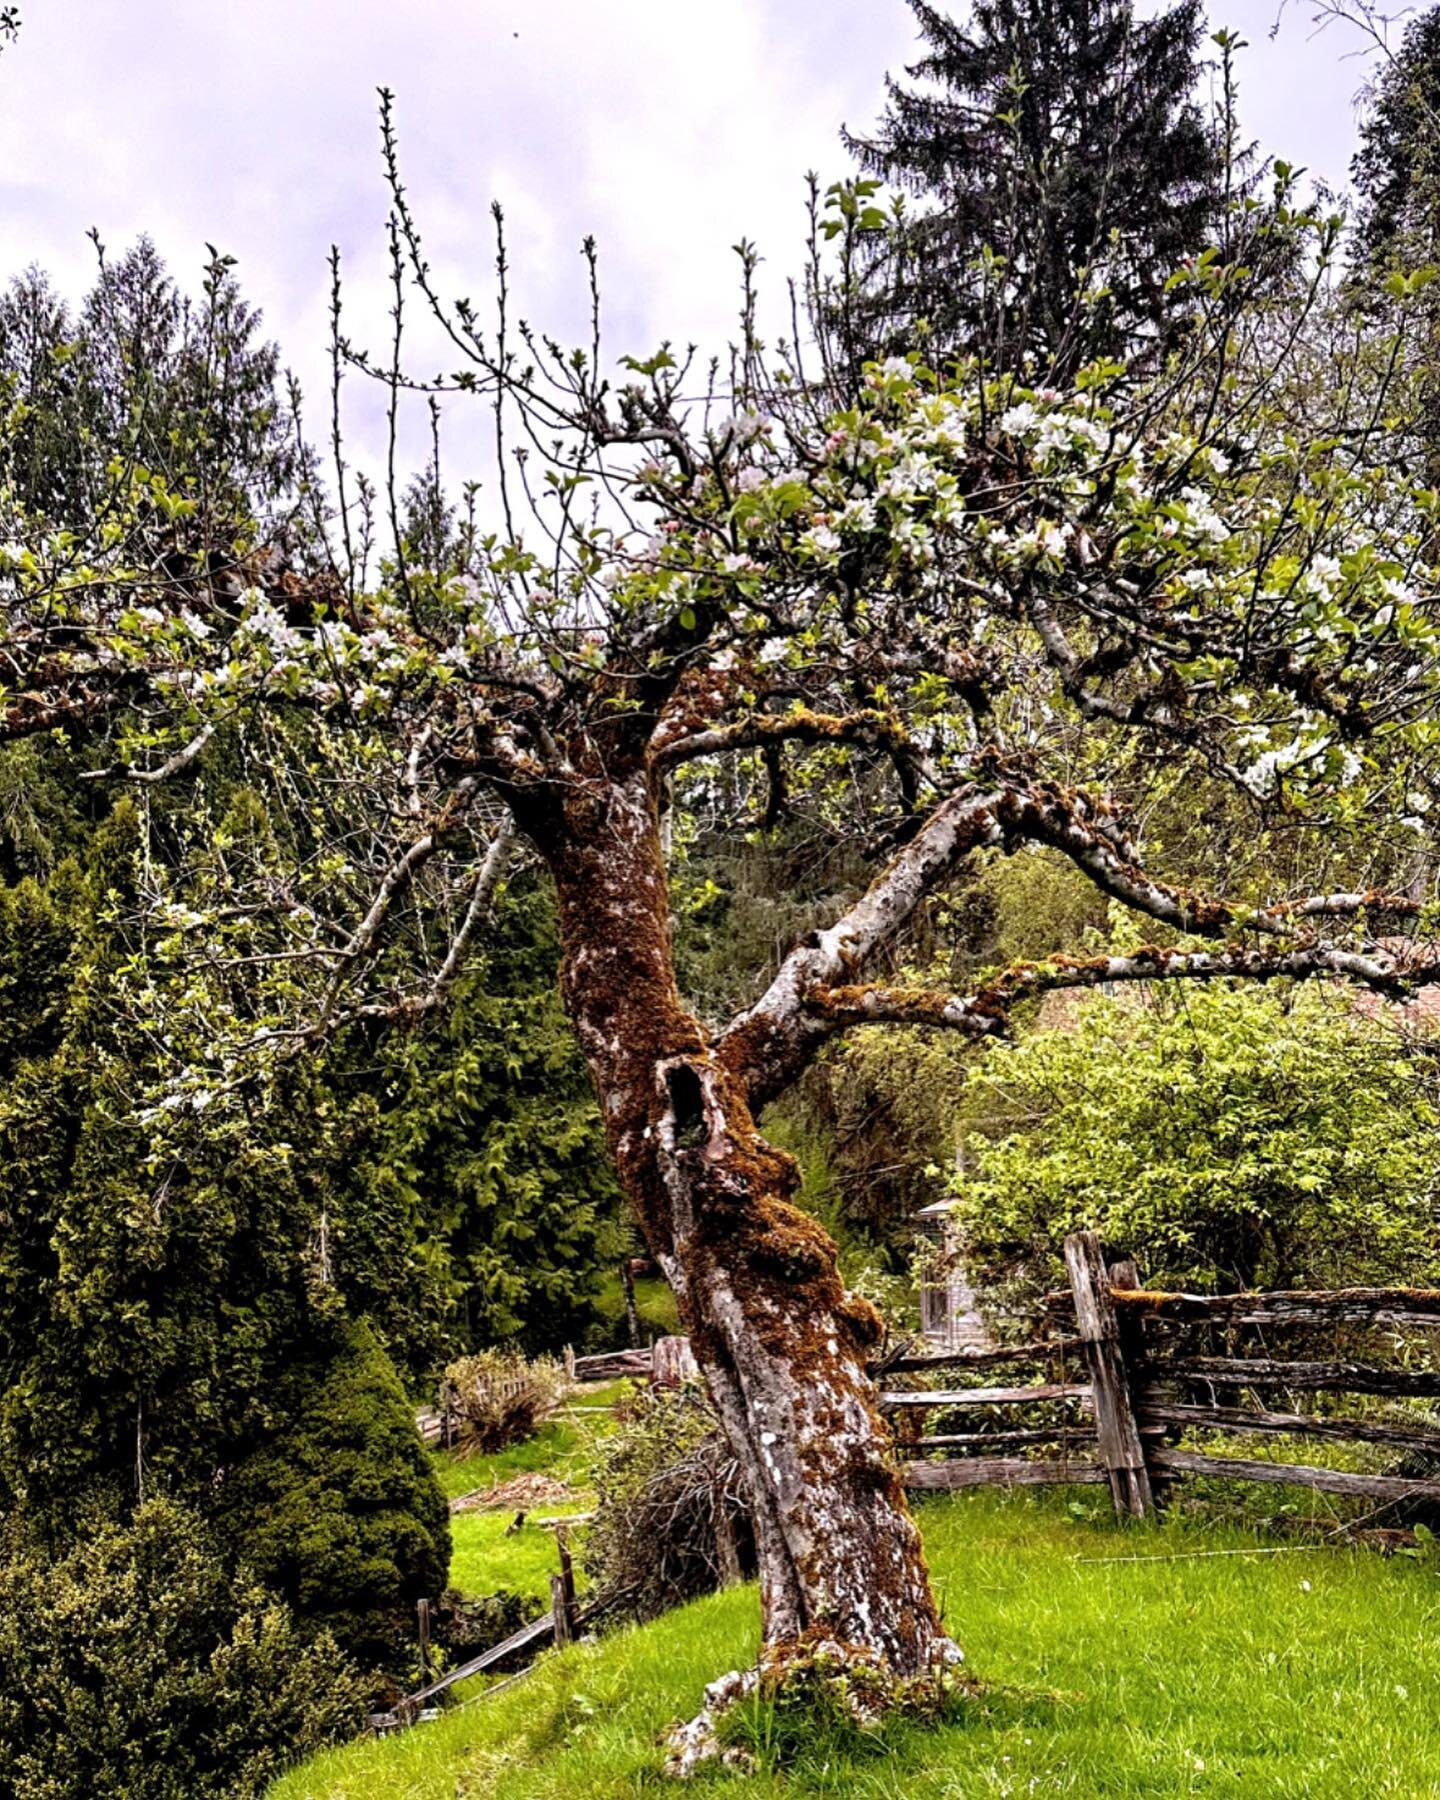 The ancient orchard is in full bloom🌸

#oregonfarms #oregonfarmstay #heritageapples #appleblossoms